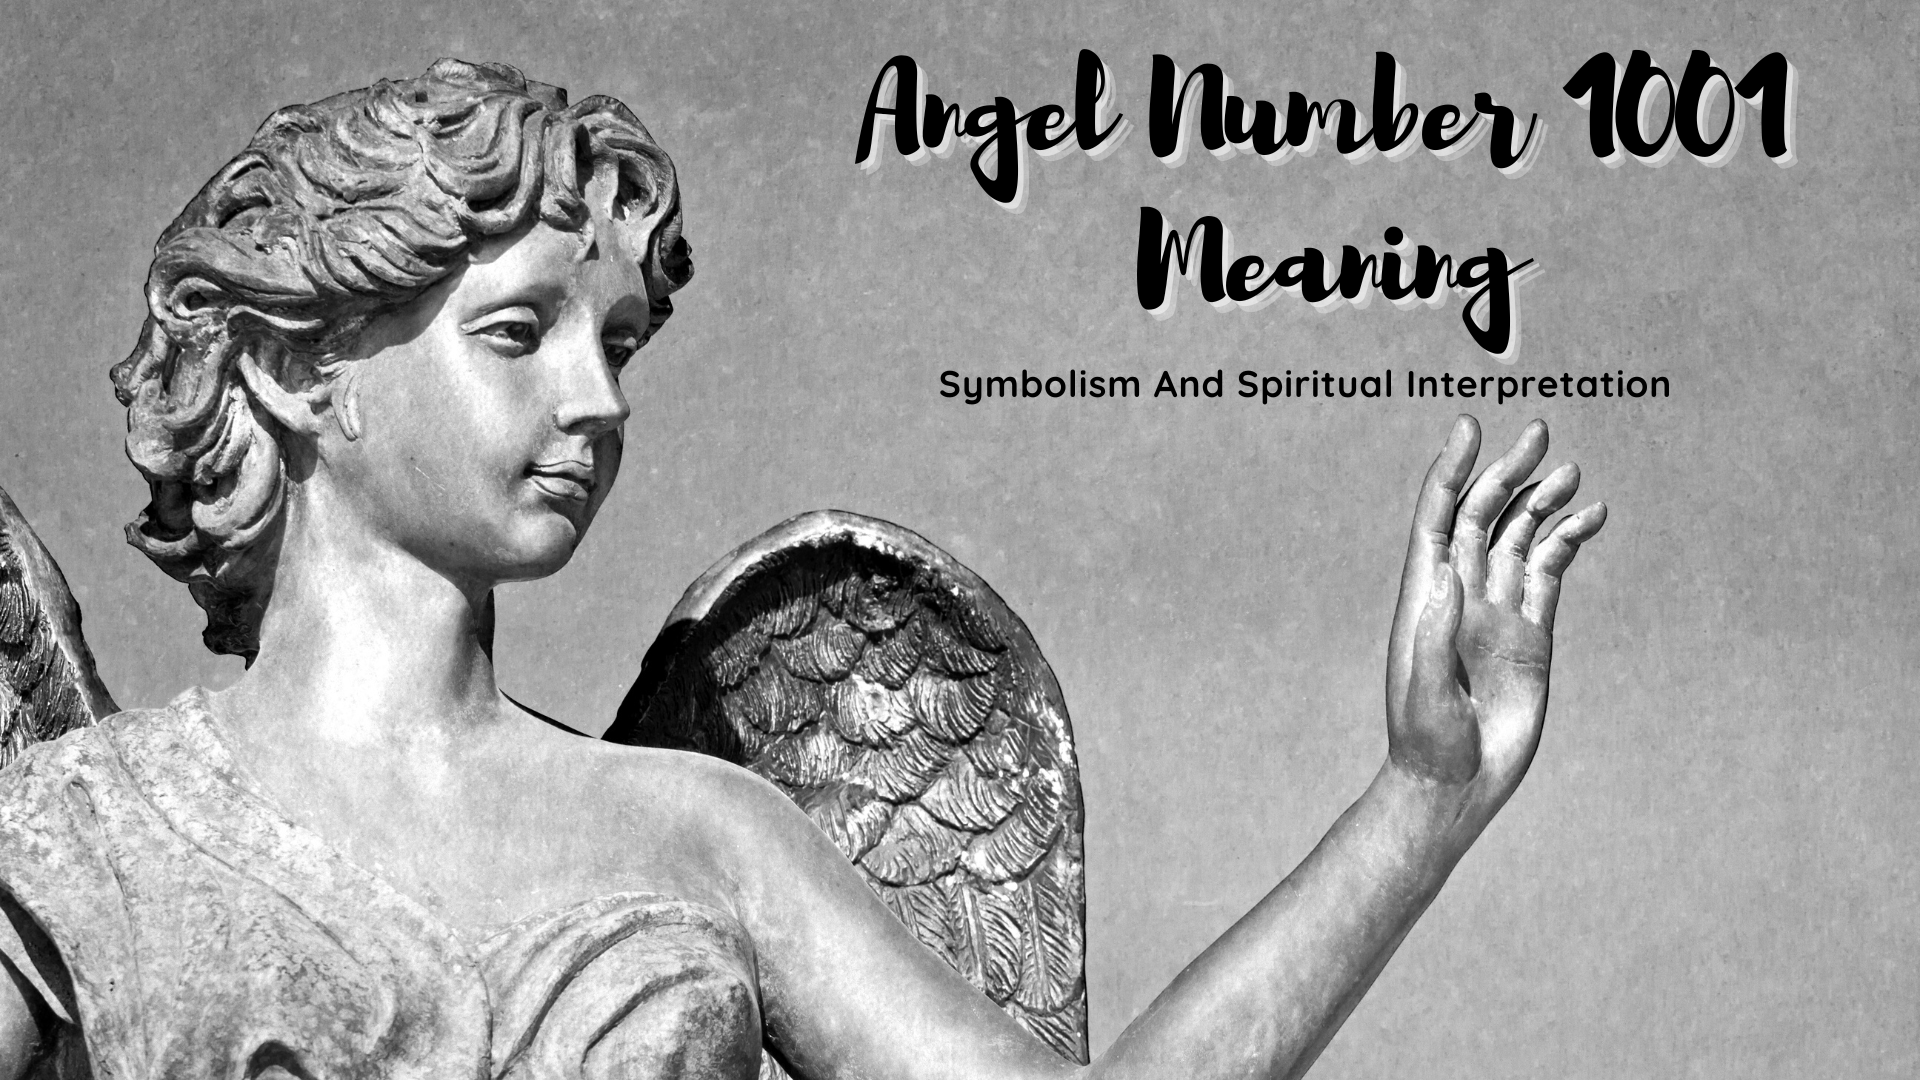 Angel Number 1001 Meaning - Symbolism And Spiritual Interpretation